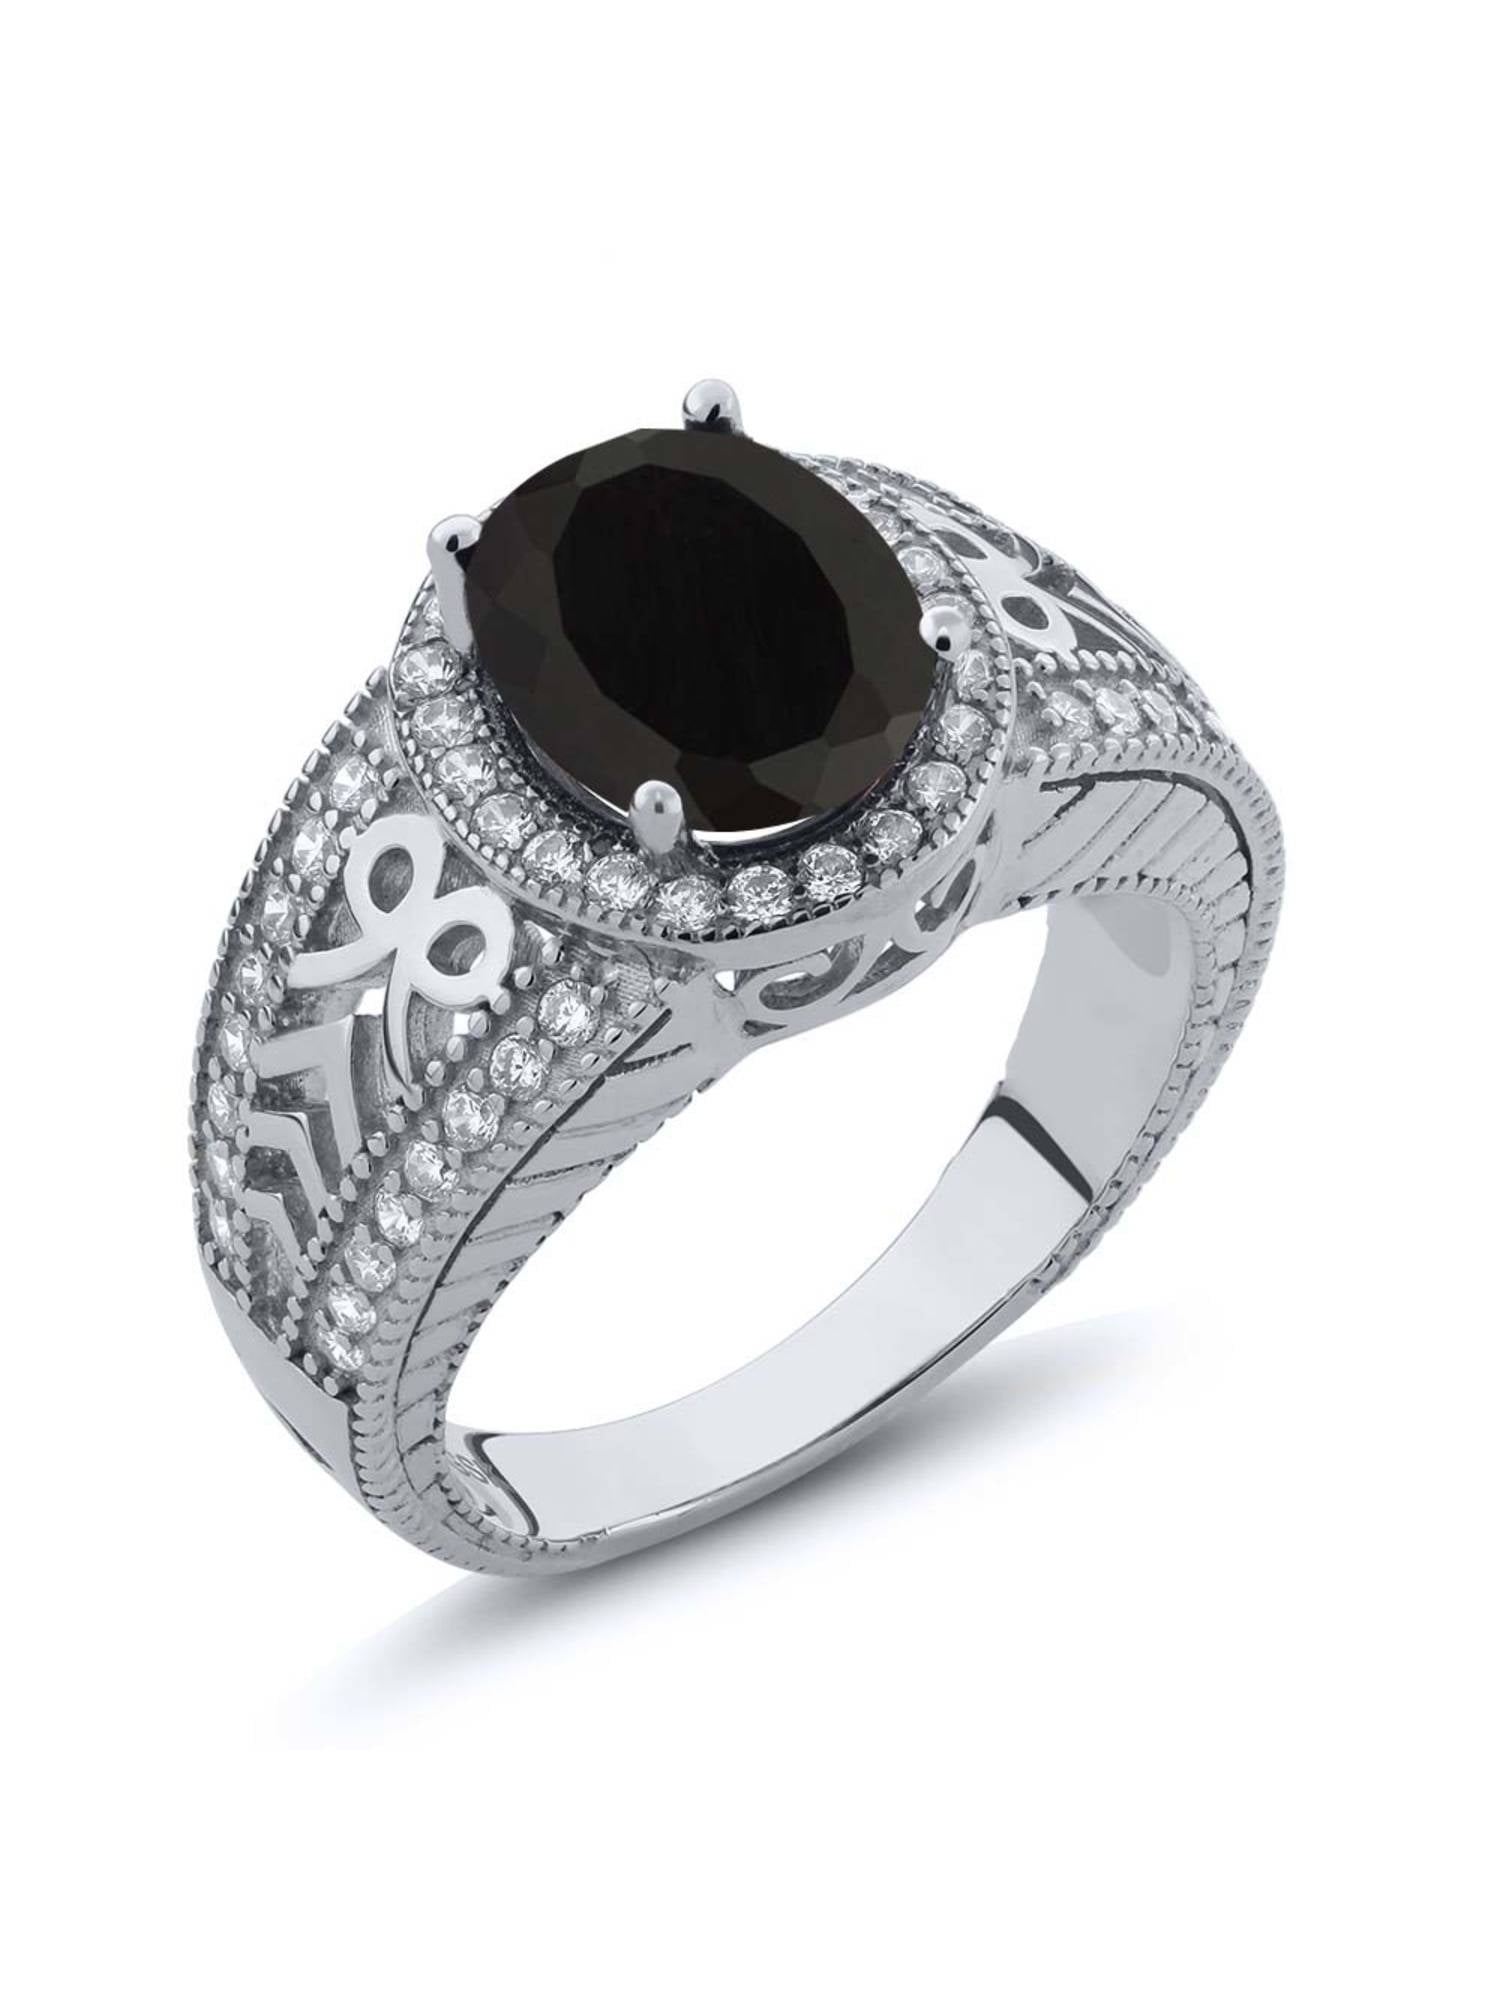 Gem Stone King - 925 Sterling Silver Black Onyx Gemstone Jewelry Women ...